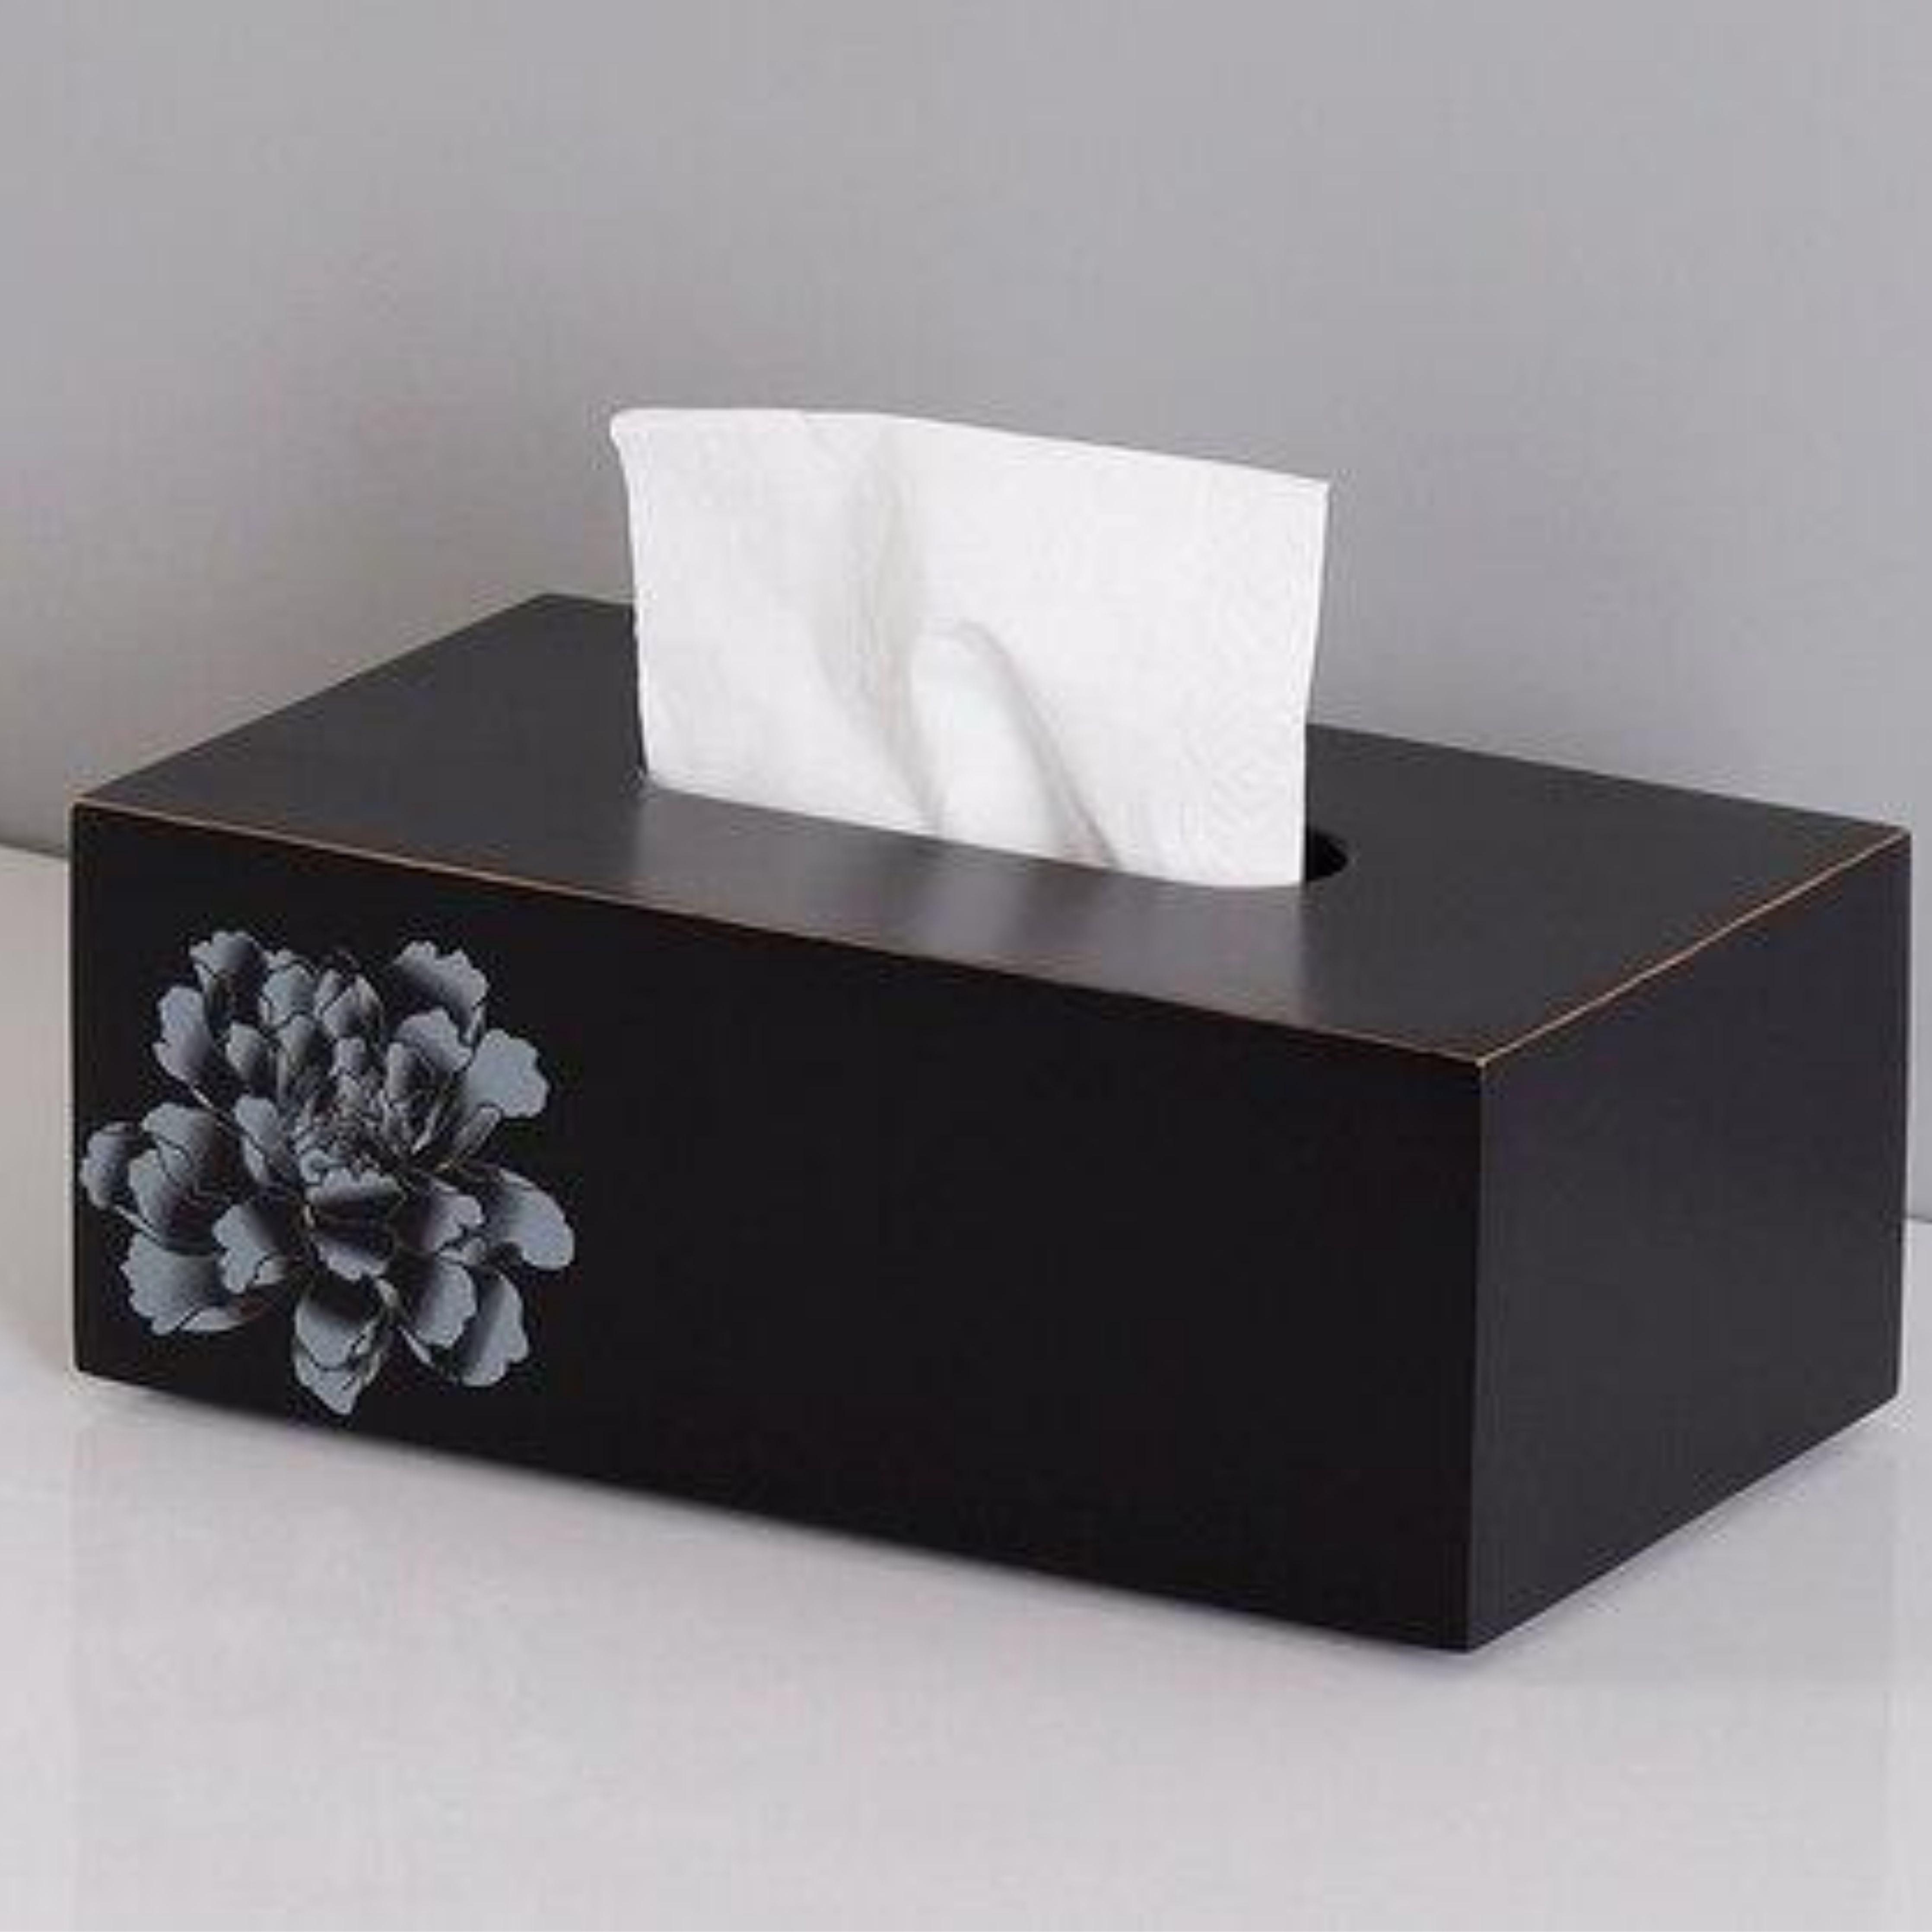 Shop 0 Tissue box Acler Bathroom Accessories Mademoiselle Home Decor